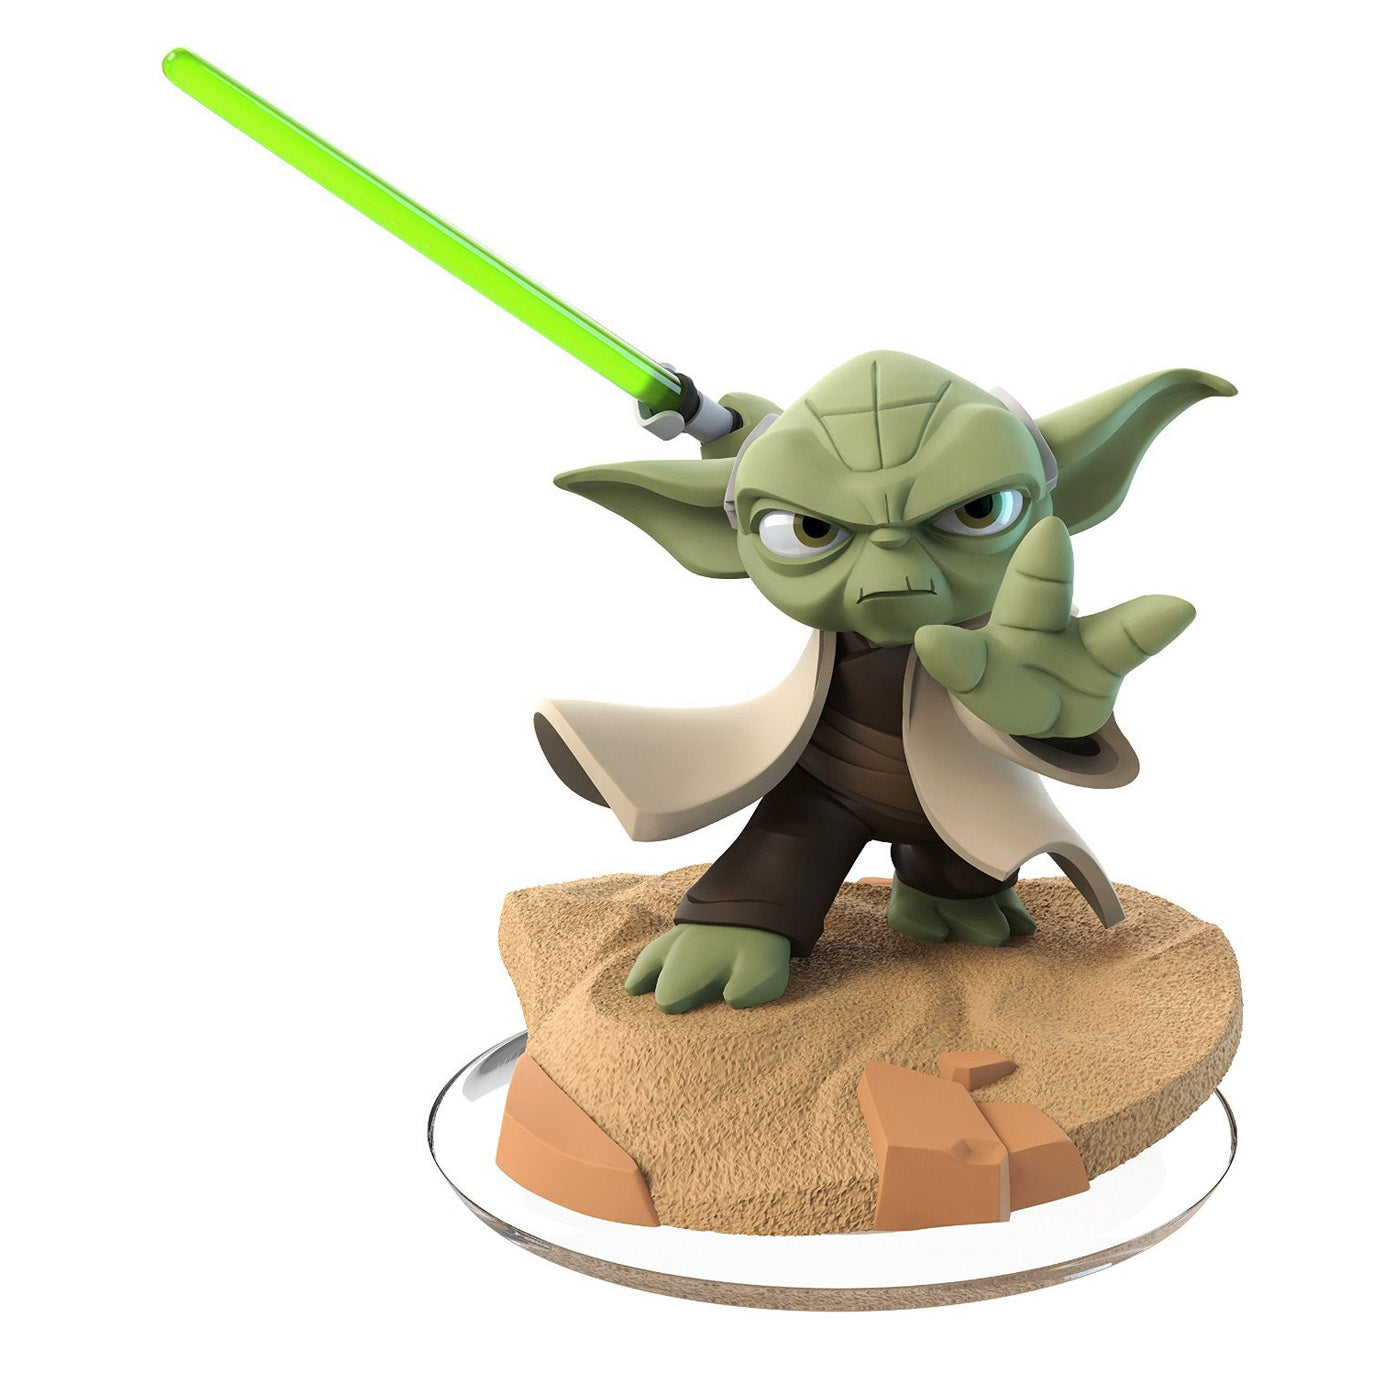 Disney Infinity 3.0 Character: Yoda